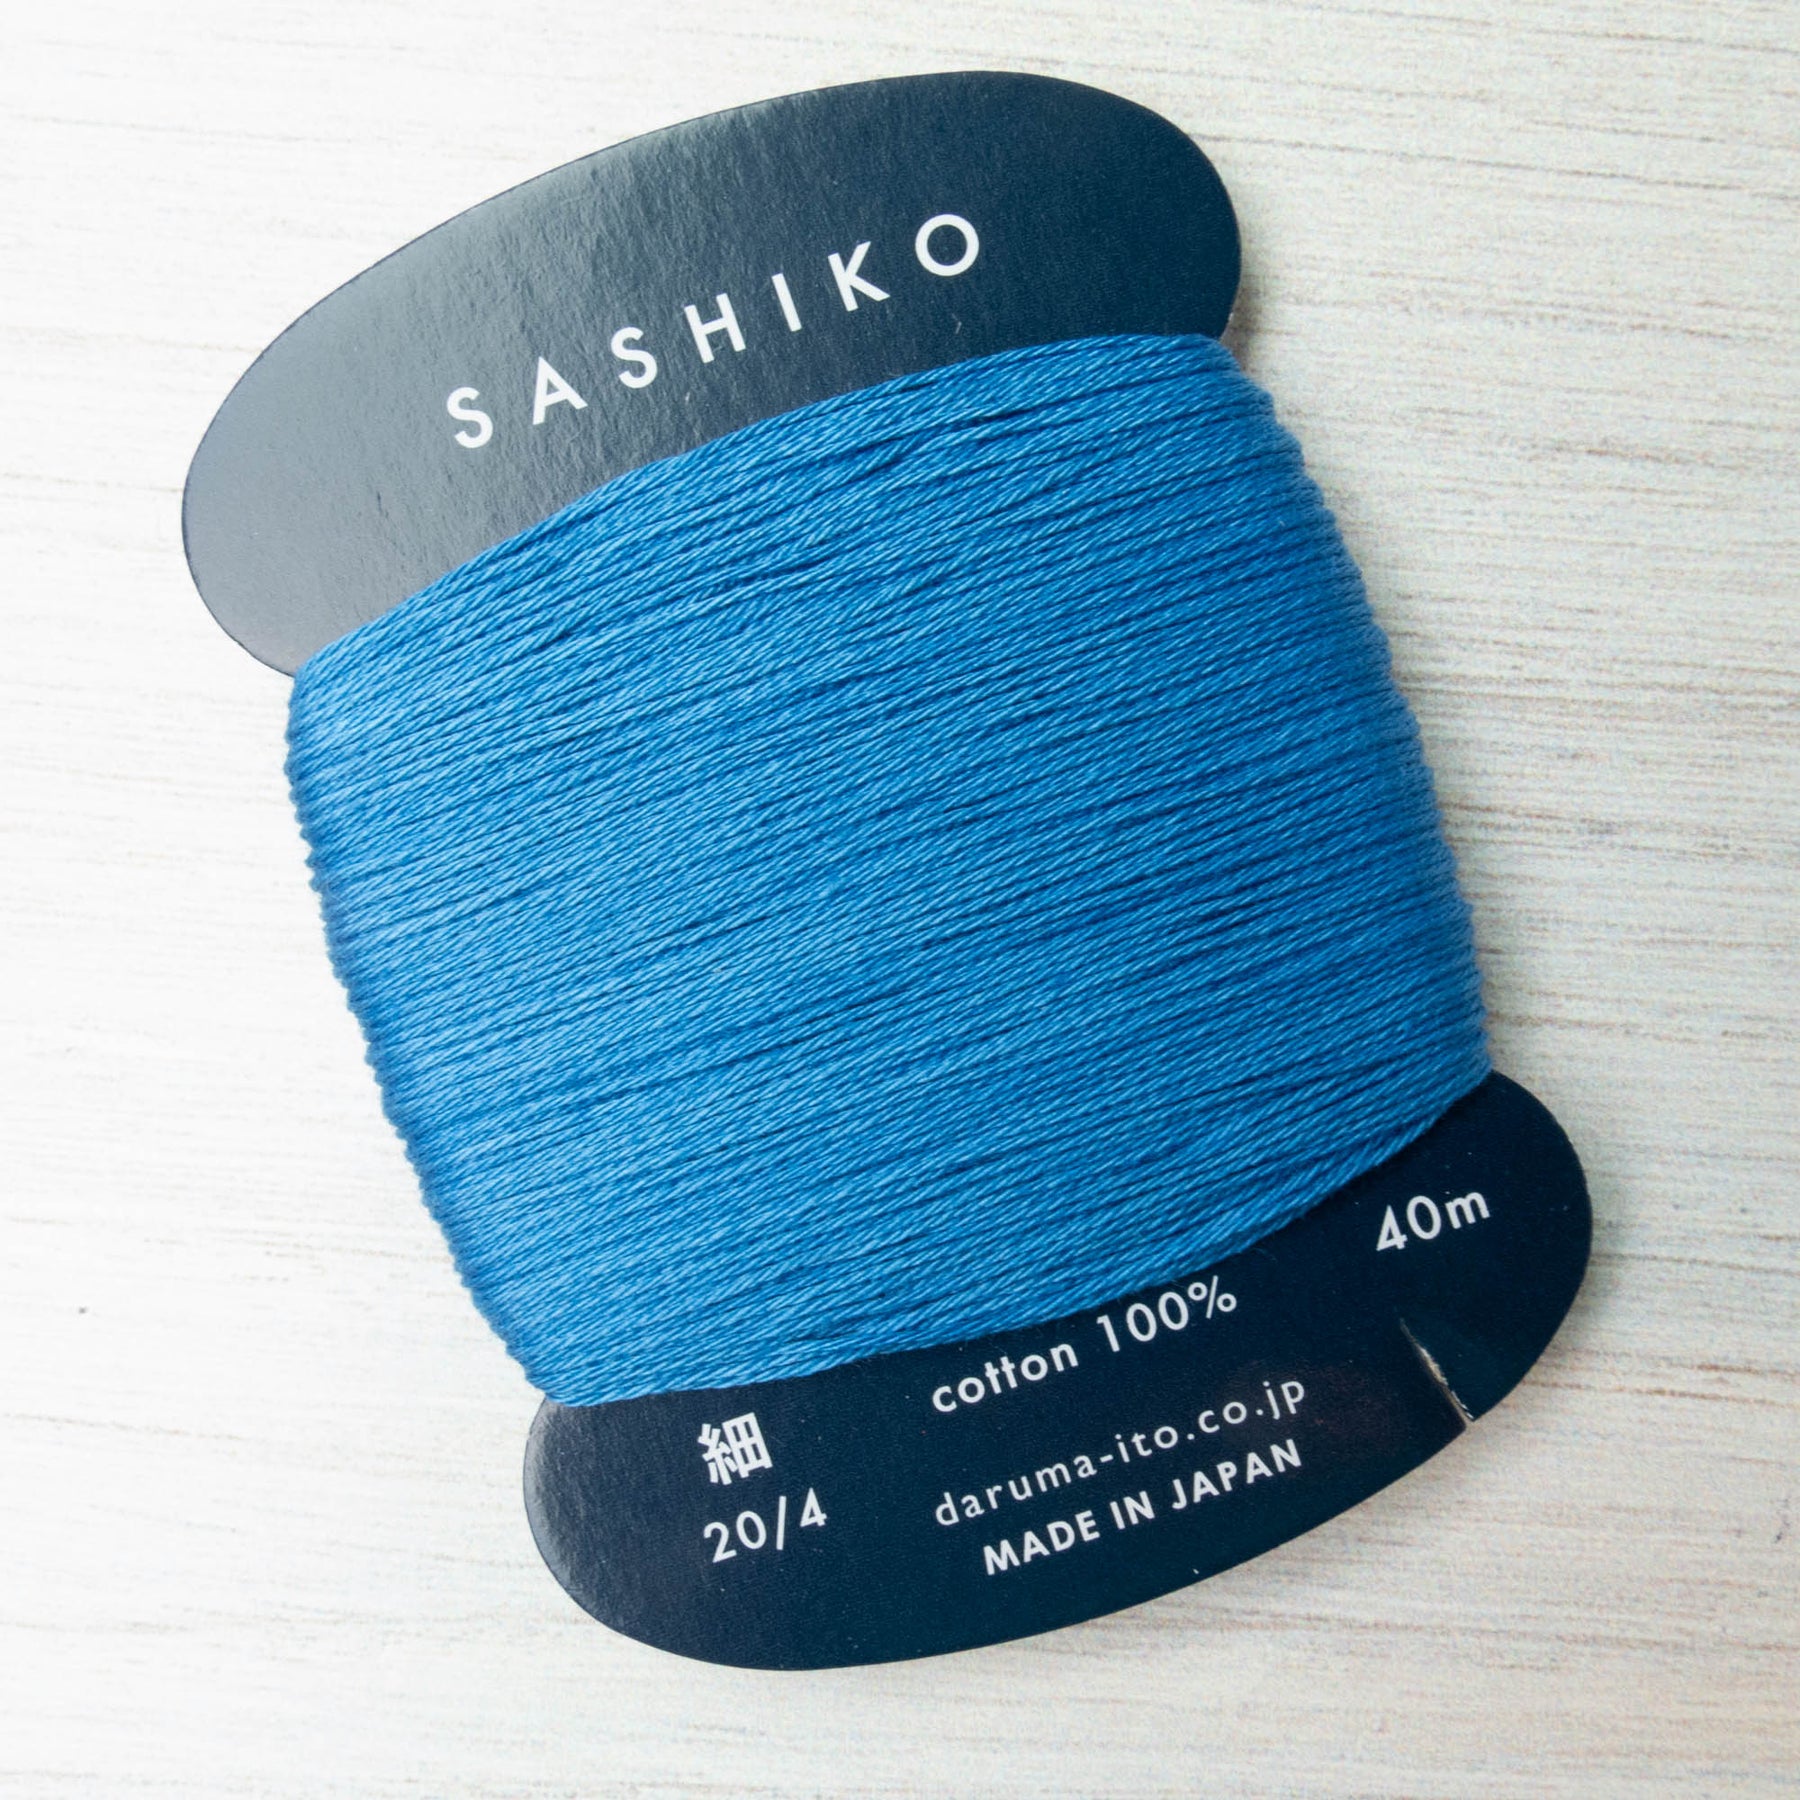 Daruma Carded Sashiko Thread - Plum (No. 222) Thin (20/4)